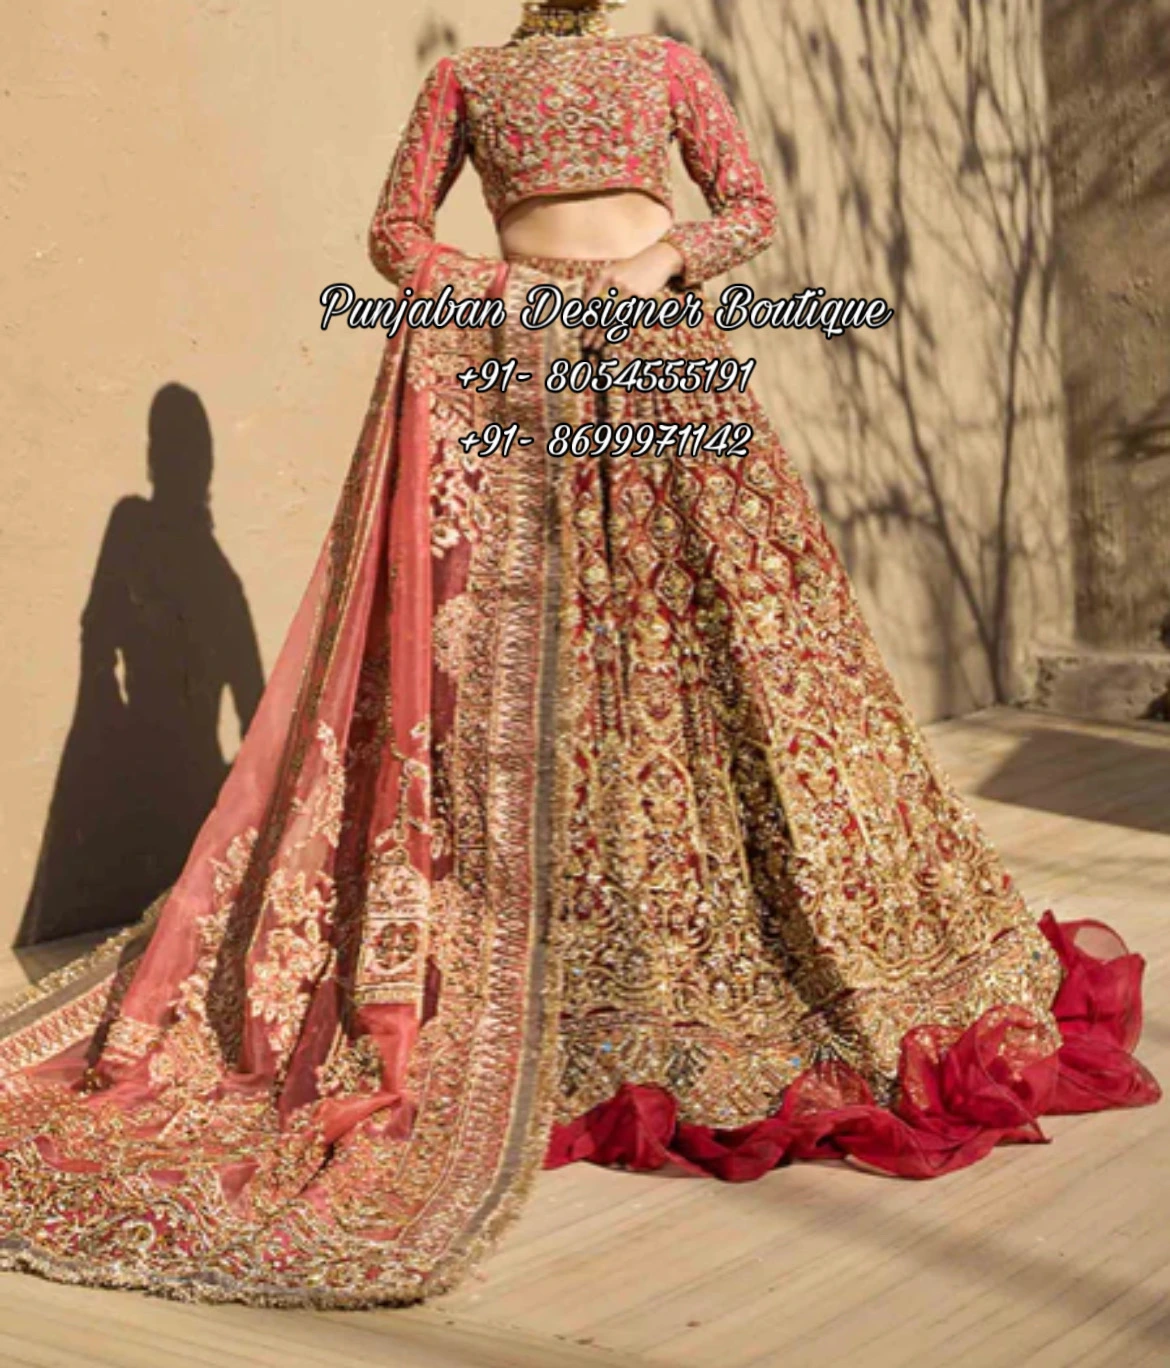 New Designer Bridal Lehenga | Punjaban Designer Boutique